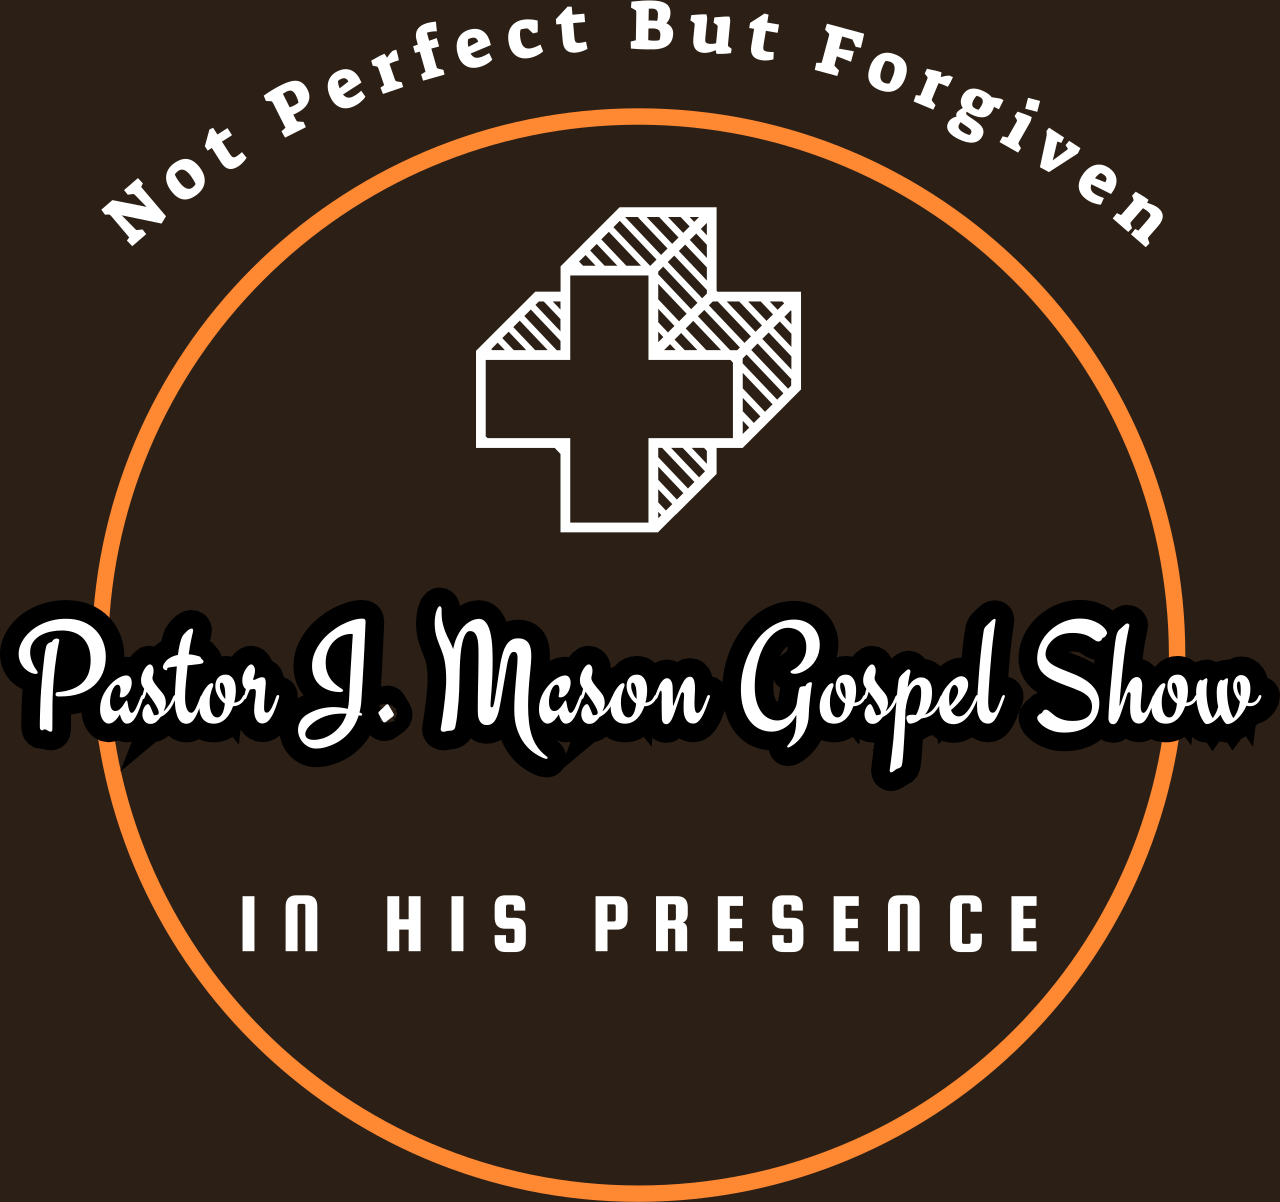 Pastor J. Mason Gospel Show's web page